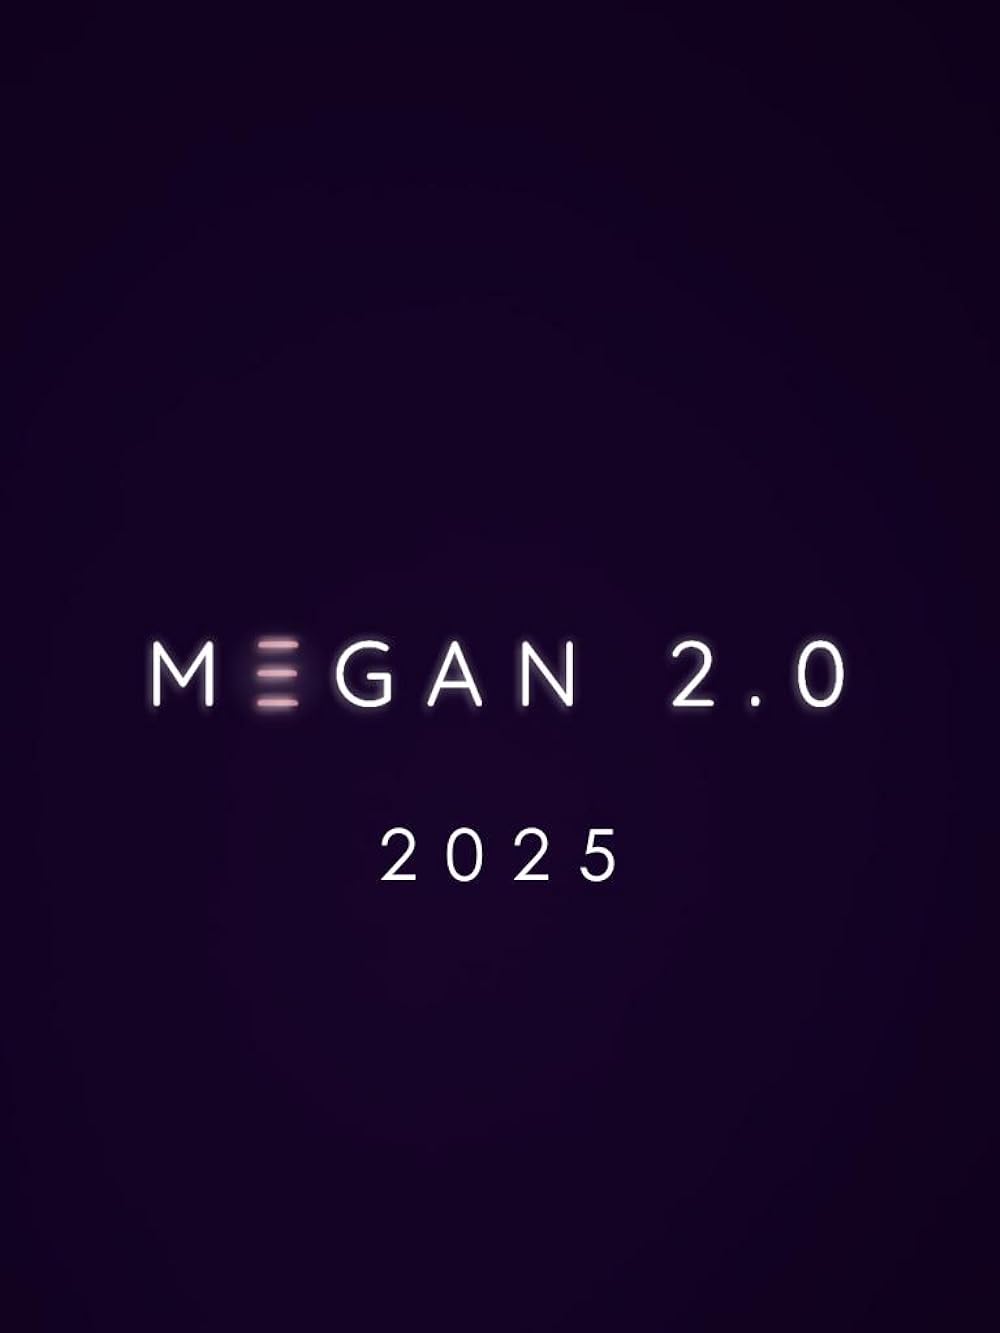 M3GAN 2.0 (2025) DVD Release Date